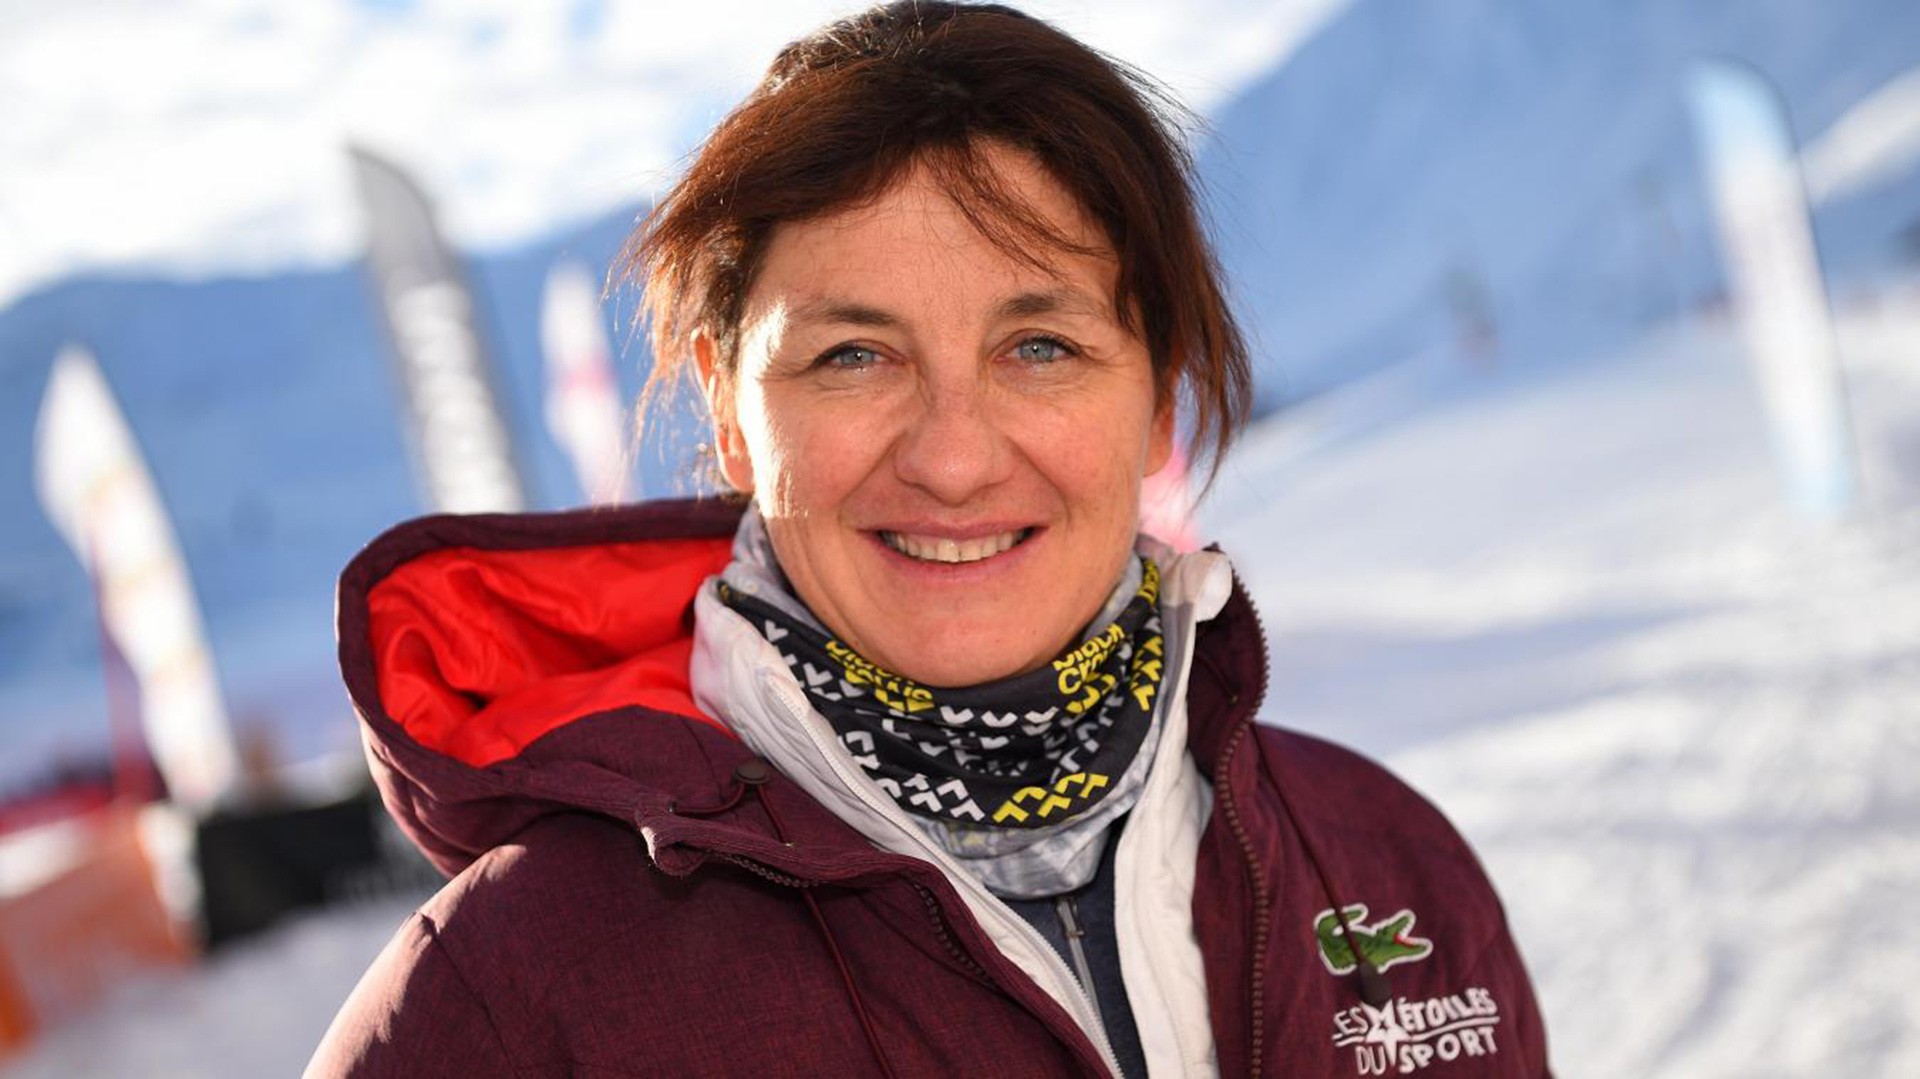 Championne ski Florence Masnada Chamrousse